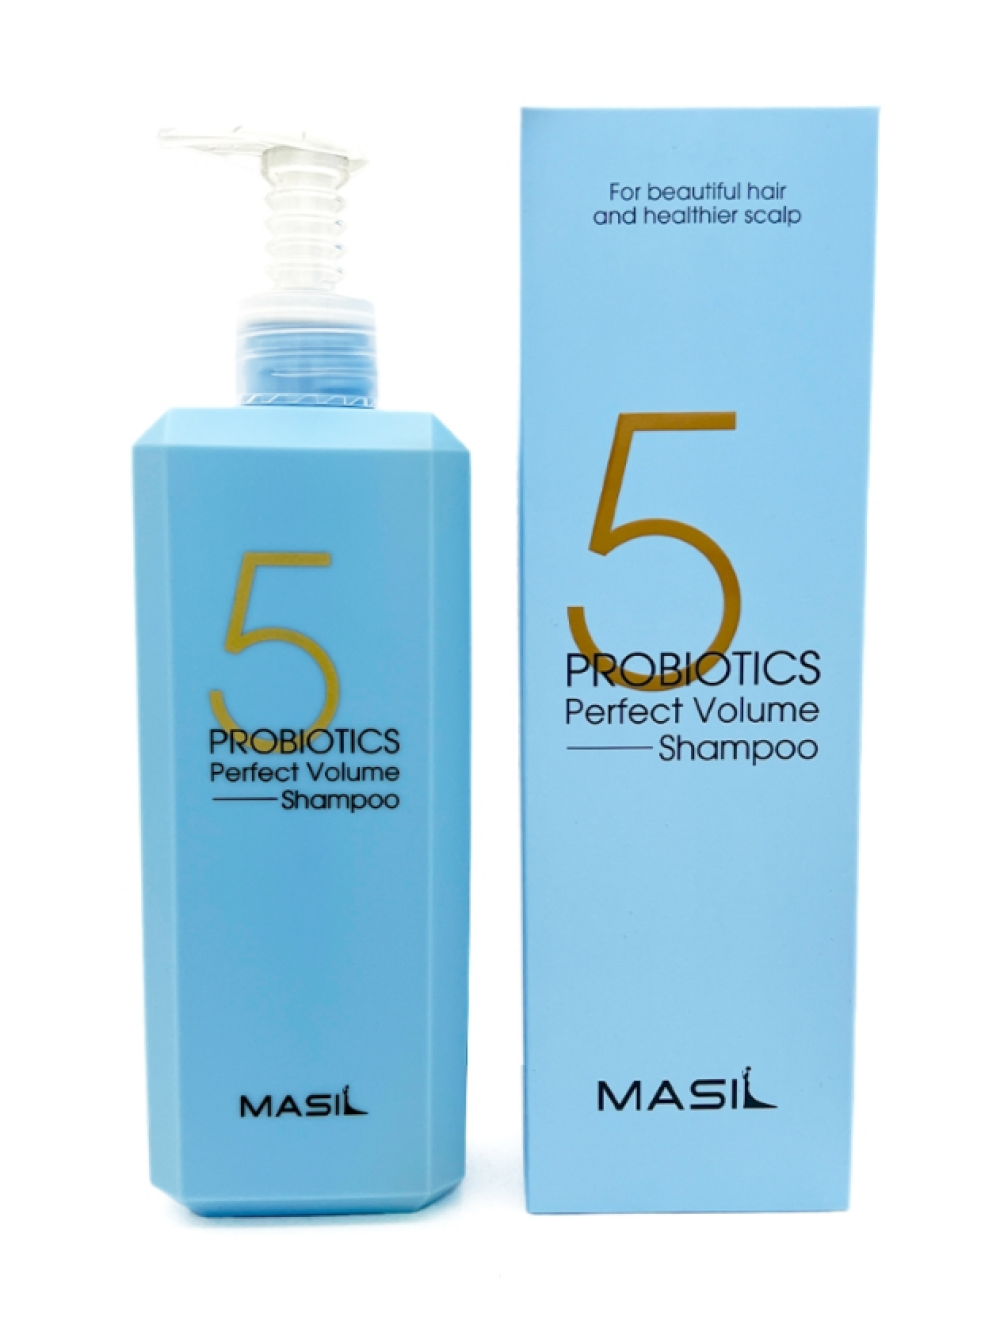 Masil Шампунь мягкий для объема волос с пробиотиками 5 Probiotics Perfect Volume Shampoo, 500 мл